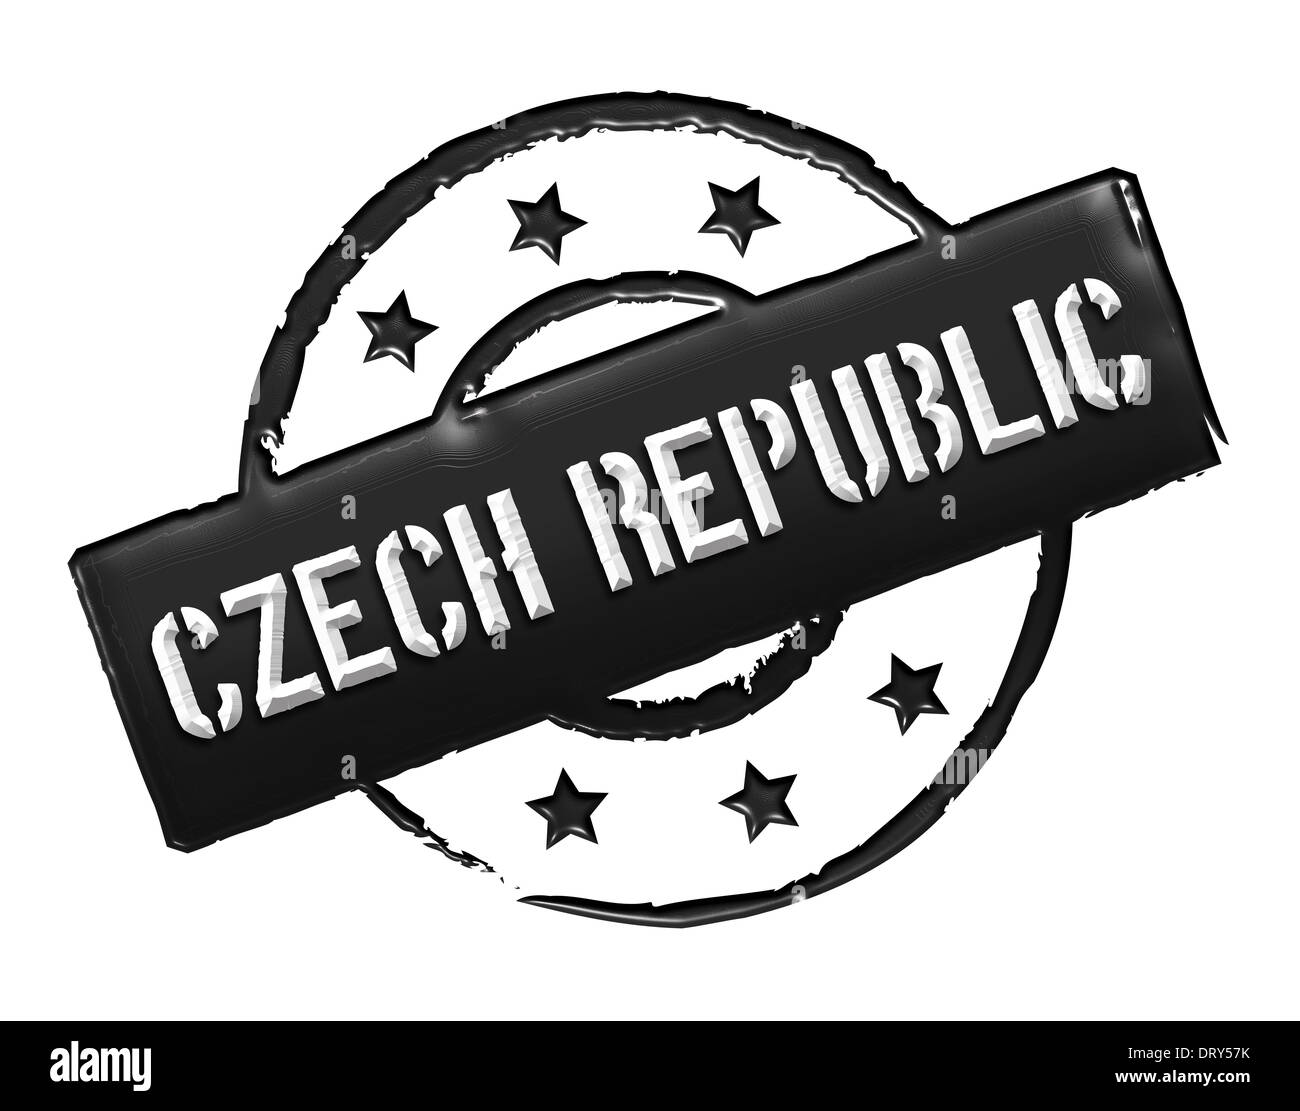 Czech Republic - Stamp Stock Photo